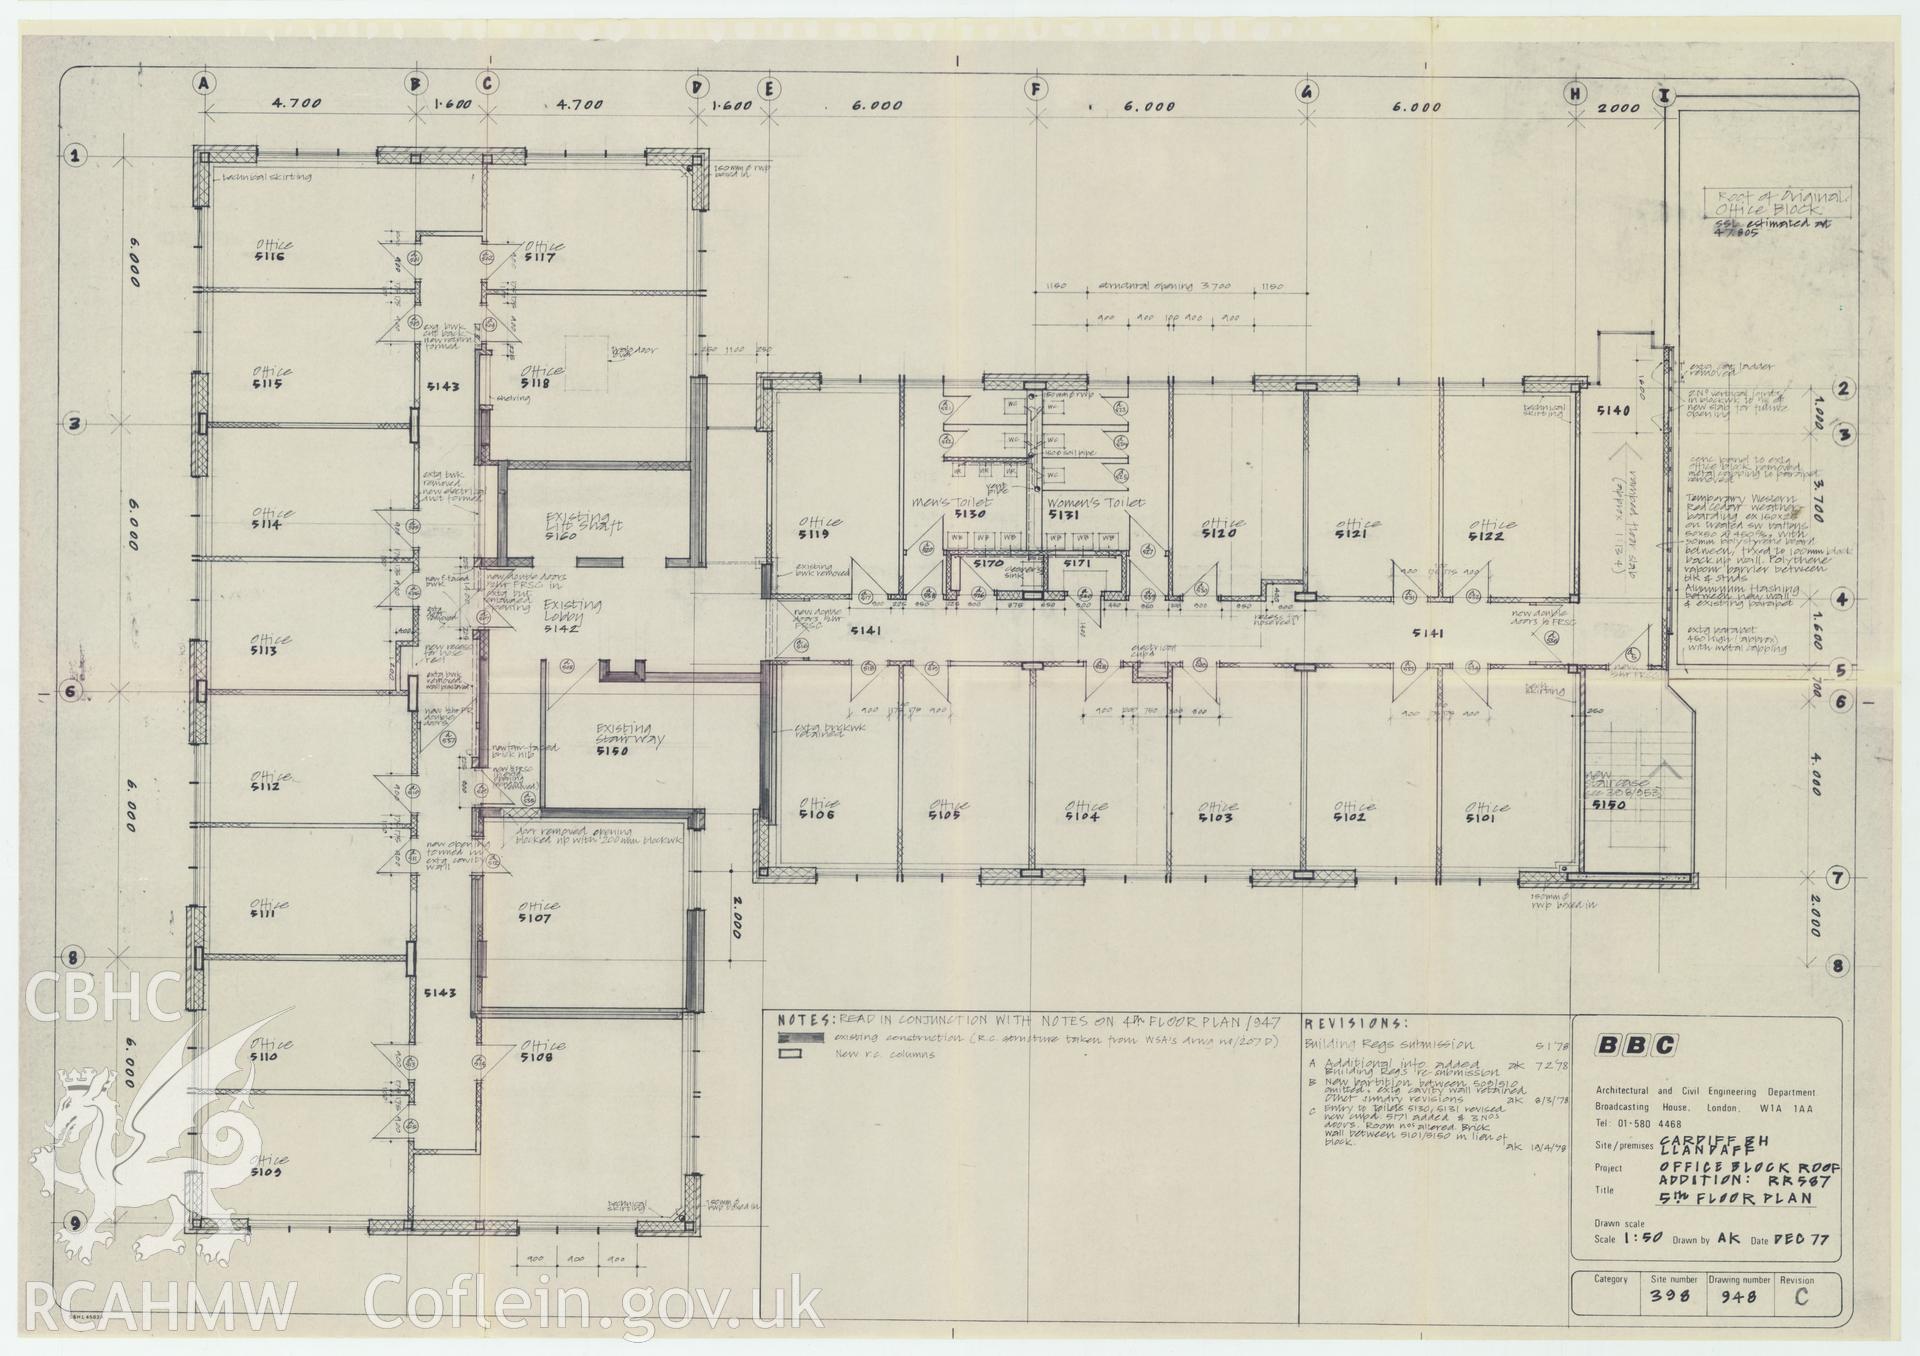 Digitised drawing plan of BBC Llandaff  - office block roof addition: RR587, fifth floor plan. Drawing no. 948 RevC. December 1977.